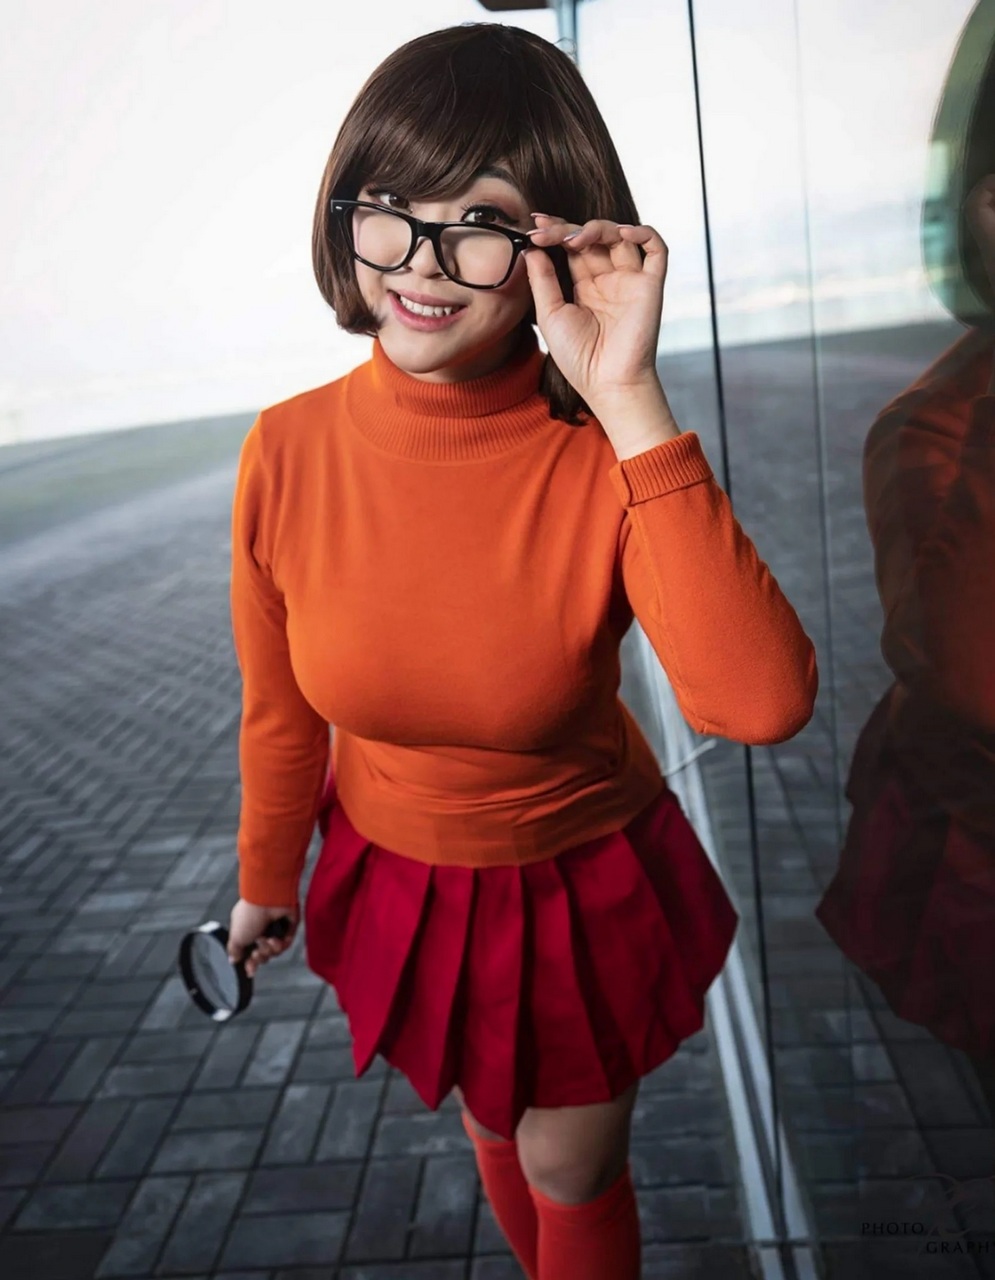 Velma By Angeldonn